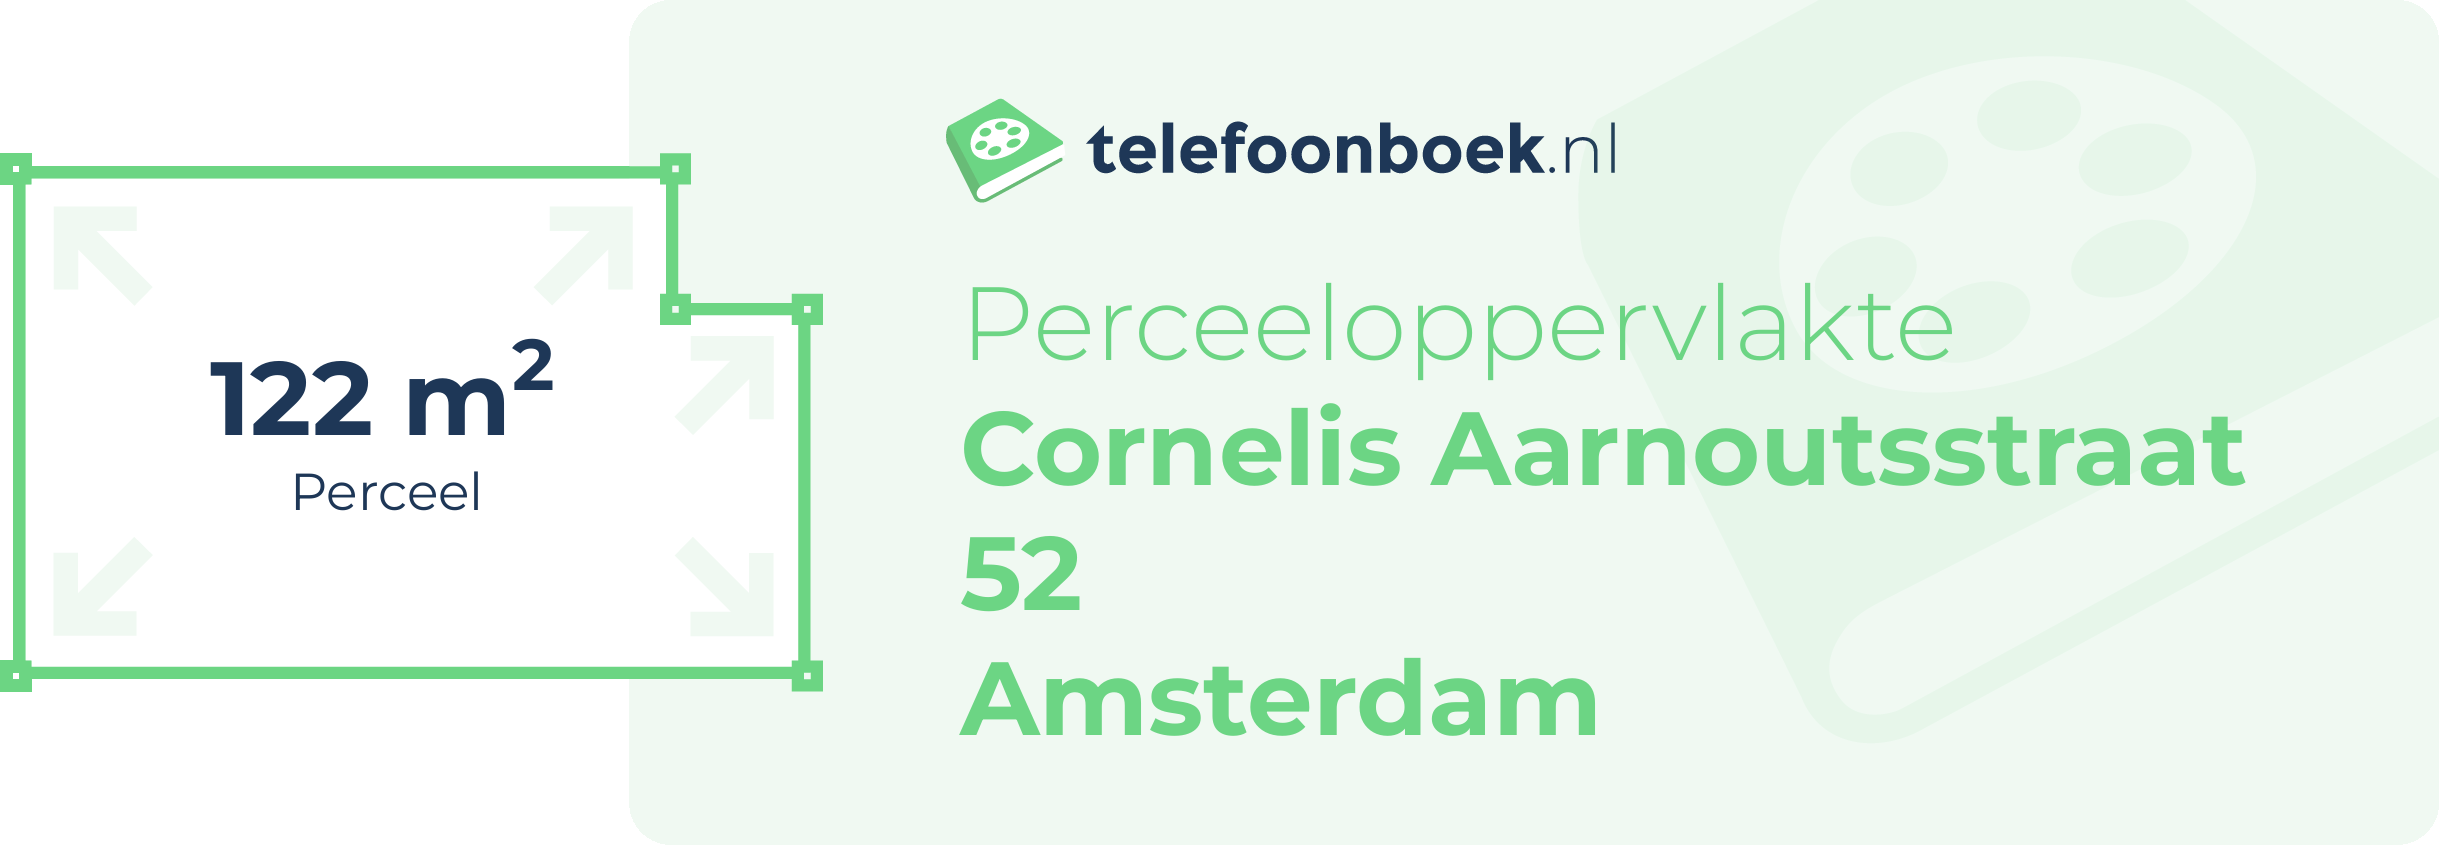 Perceeloppervlakte Cornelis Aarnoutsstraat 52 Amsterdam